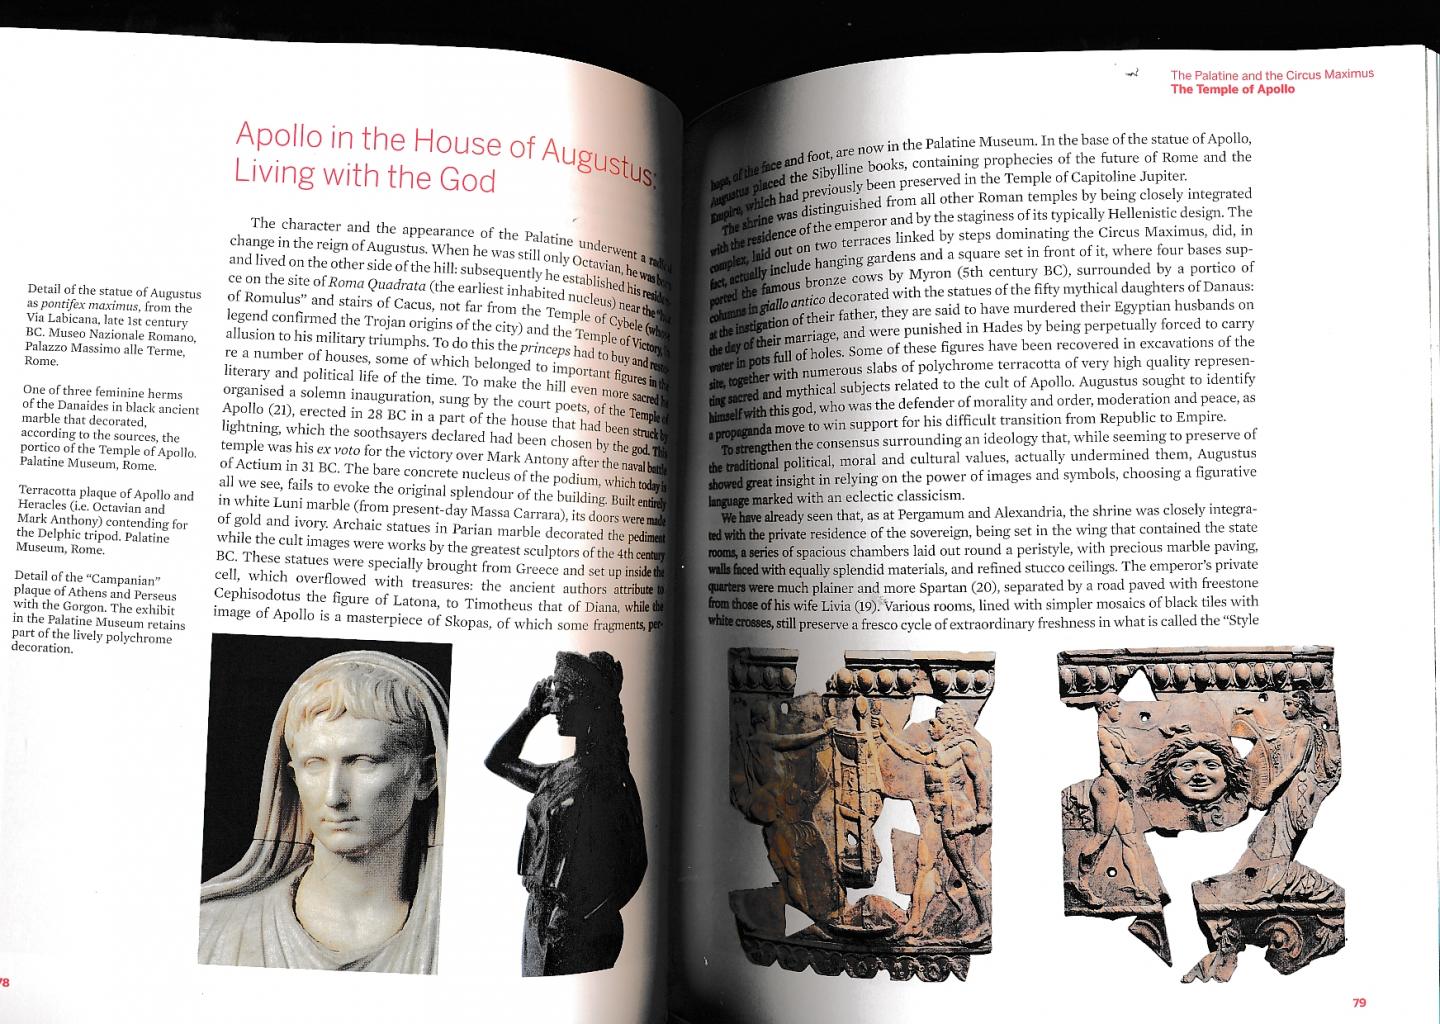 Adriano La Regina - Archaeological Guide to Rome